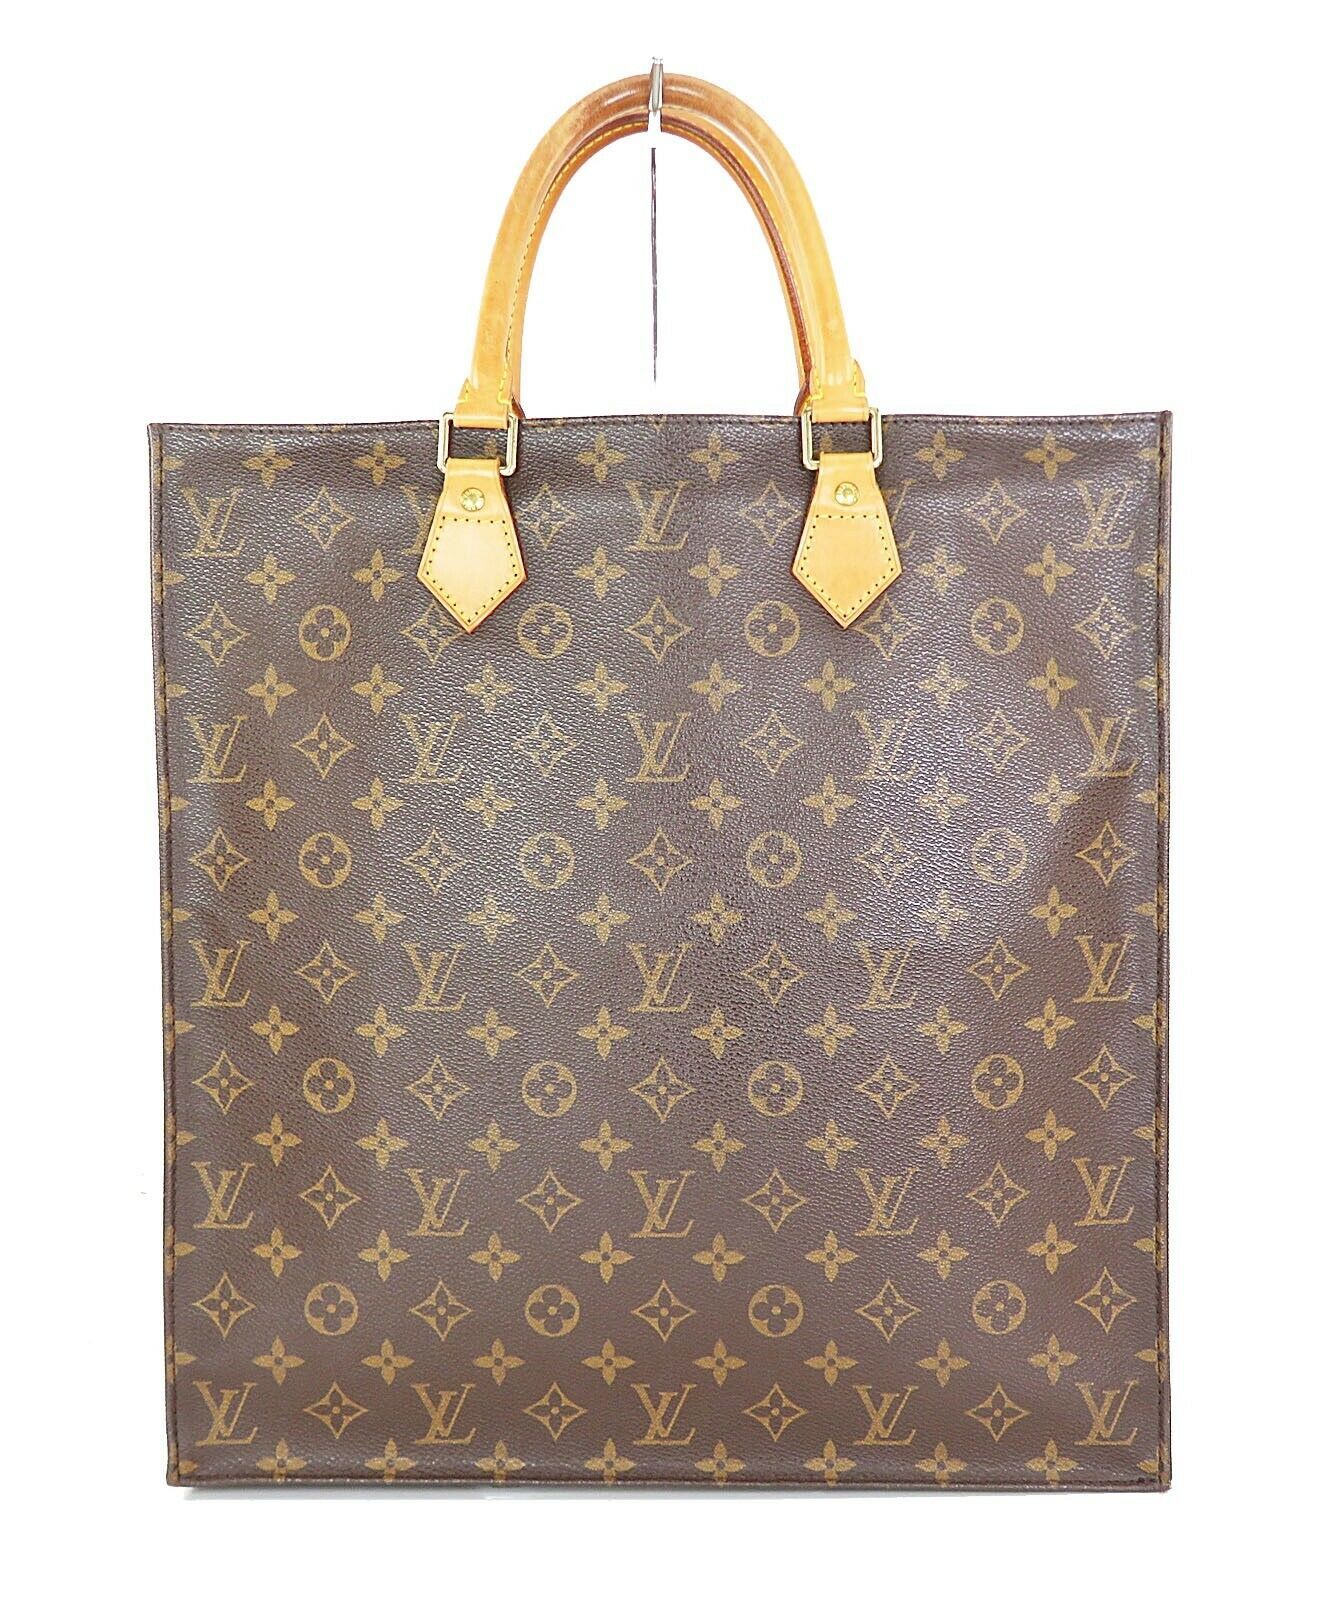 Authentic Louis Vuitton Sac Plat Monogram Tote Shopping Bag Purse #33832 - Women&#39;s Handbags & Bags